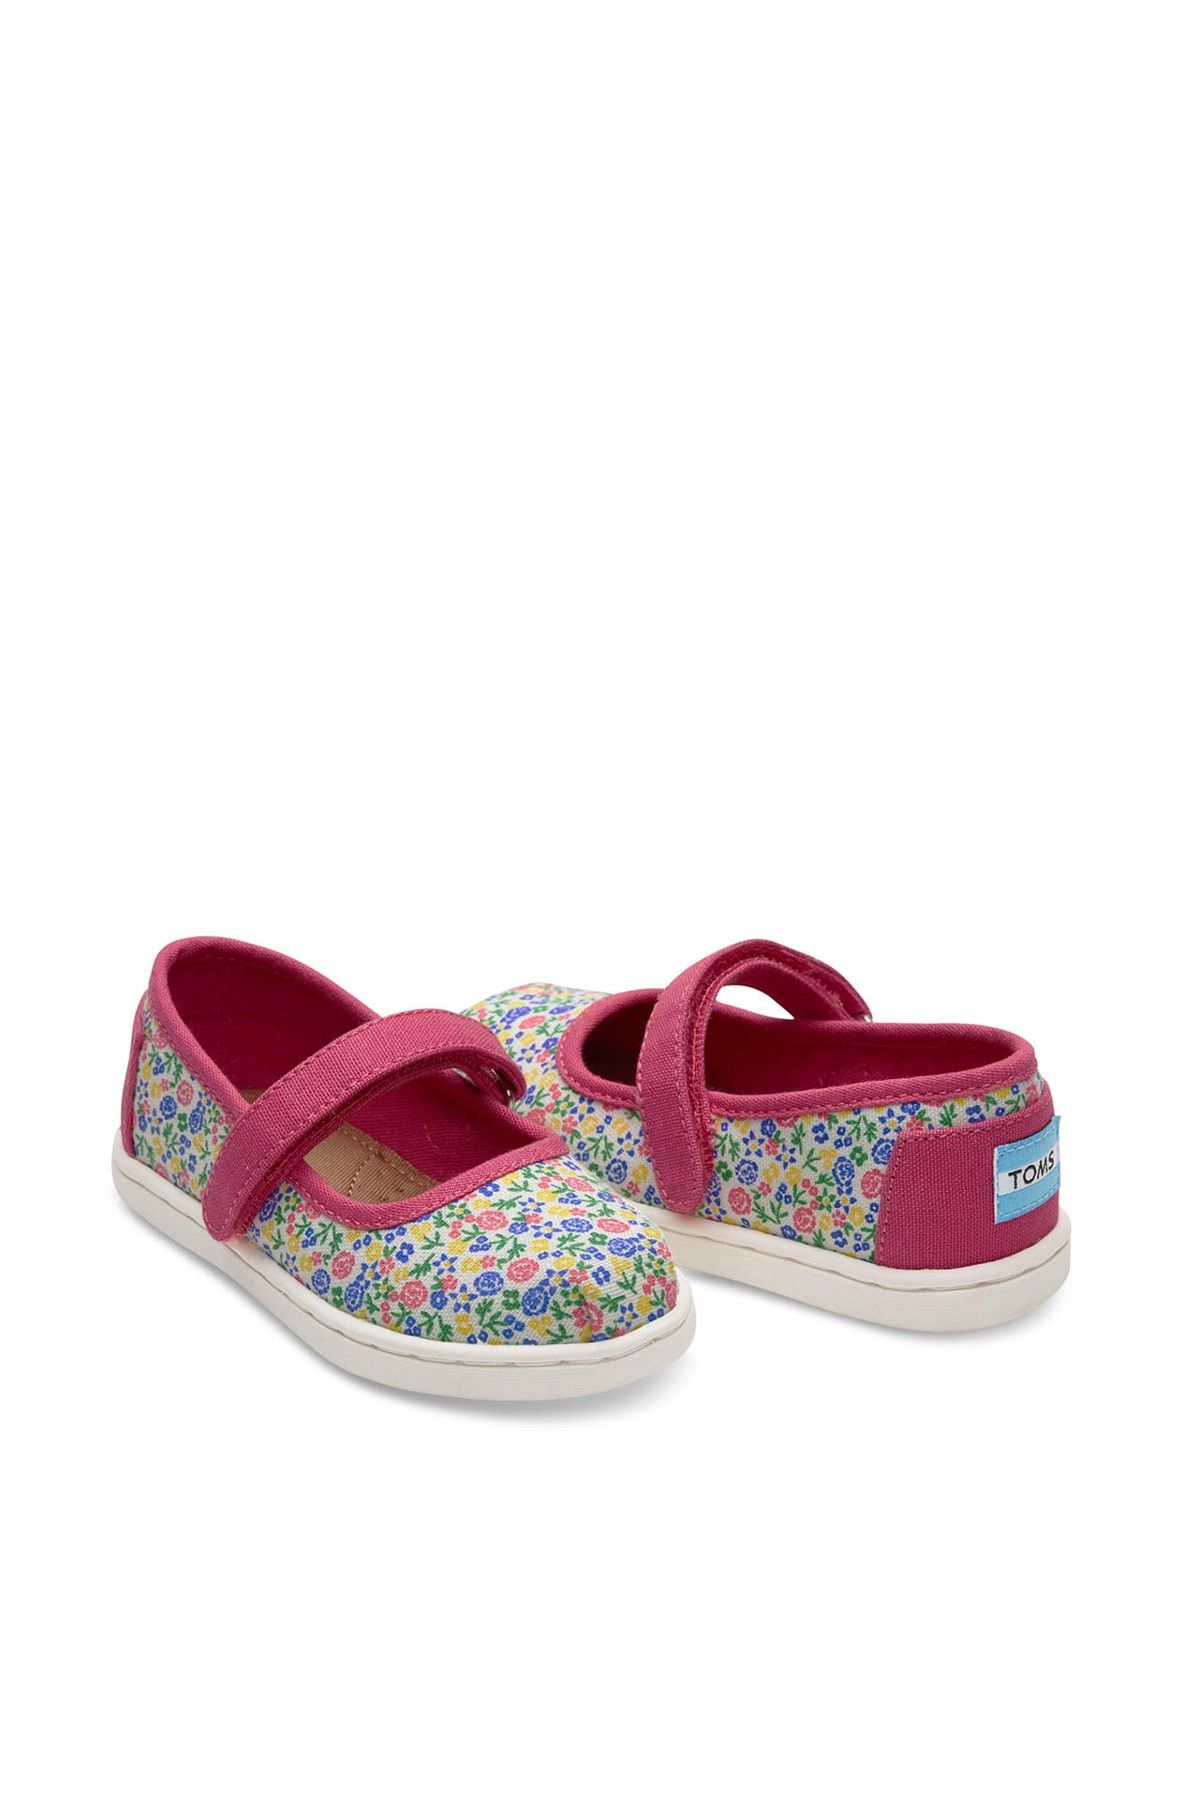 Toms Renkli Mary Jane Kız Çocuk Ayakkabı /